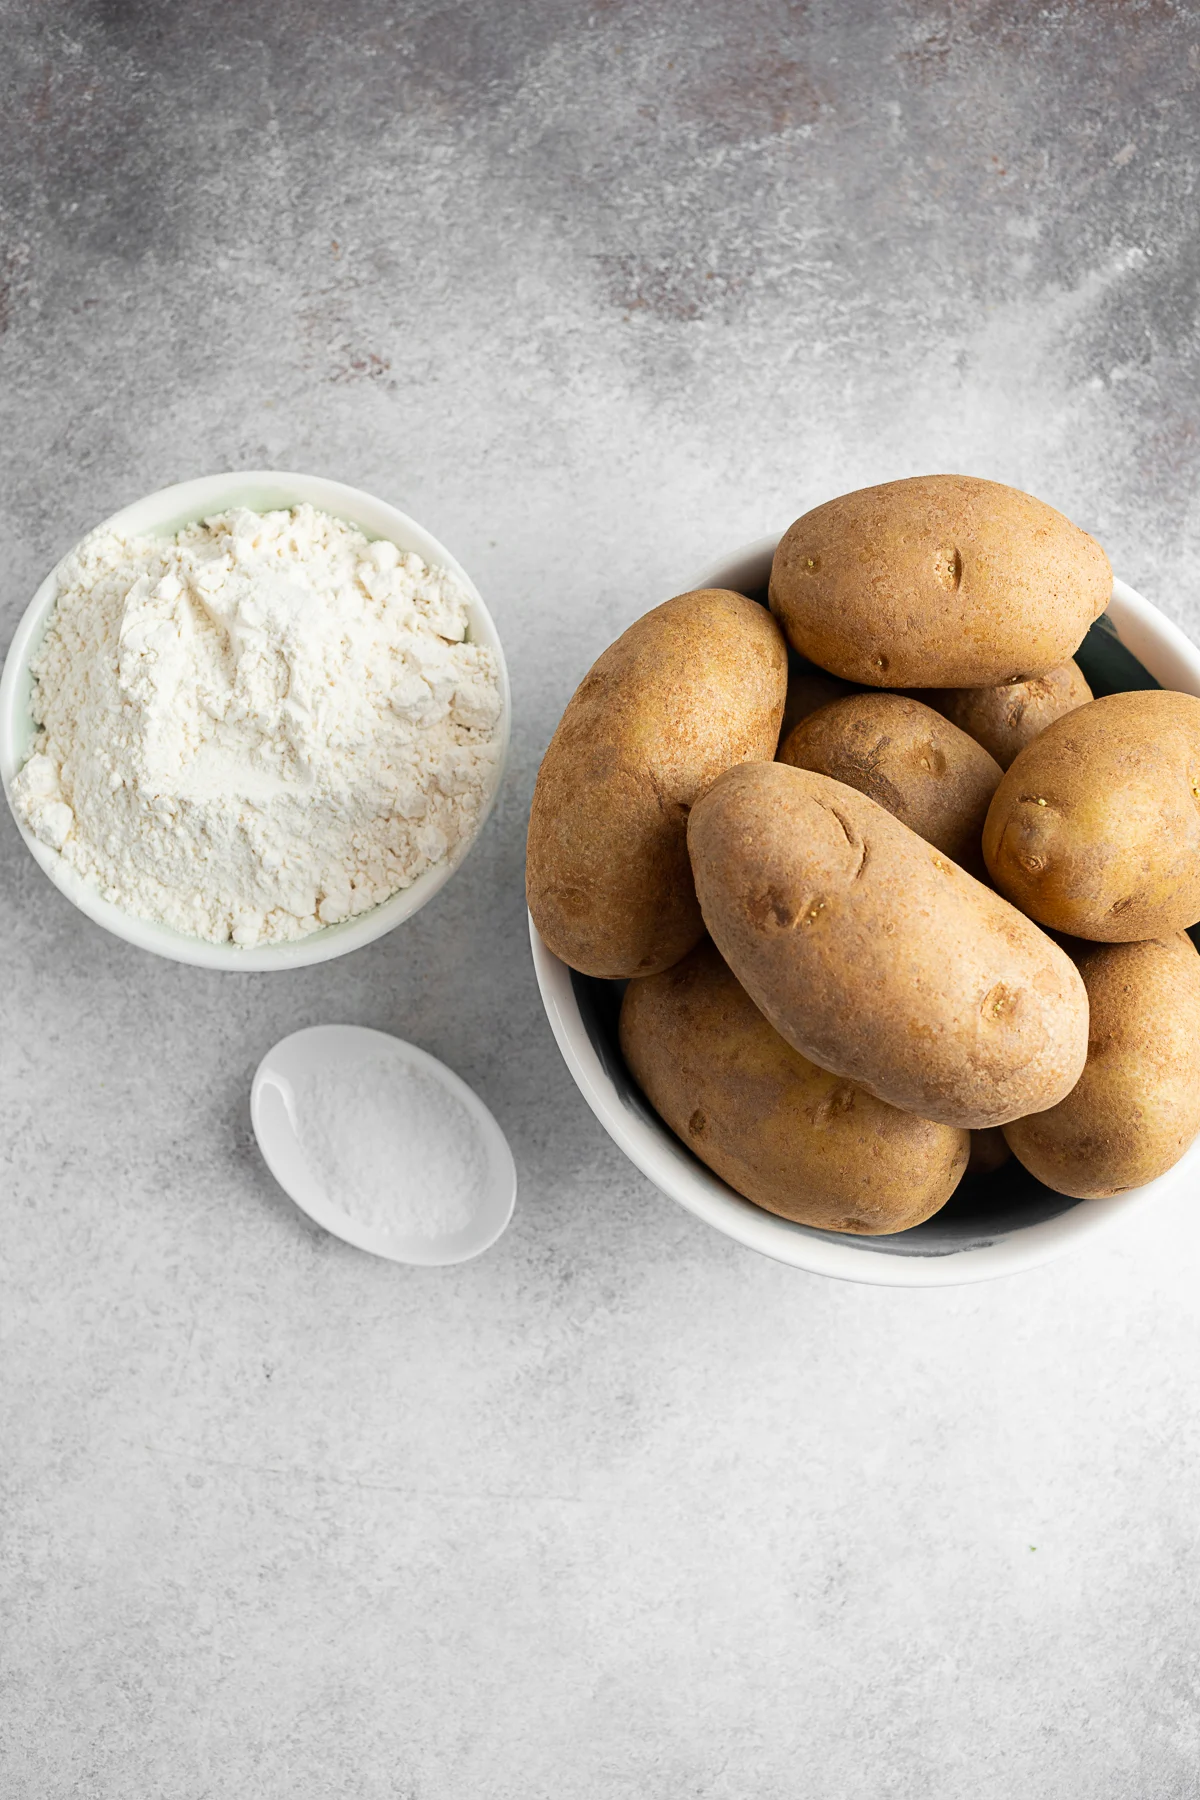 Potatoes, flour, and kosher salt on a table. 